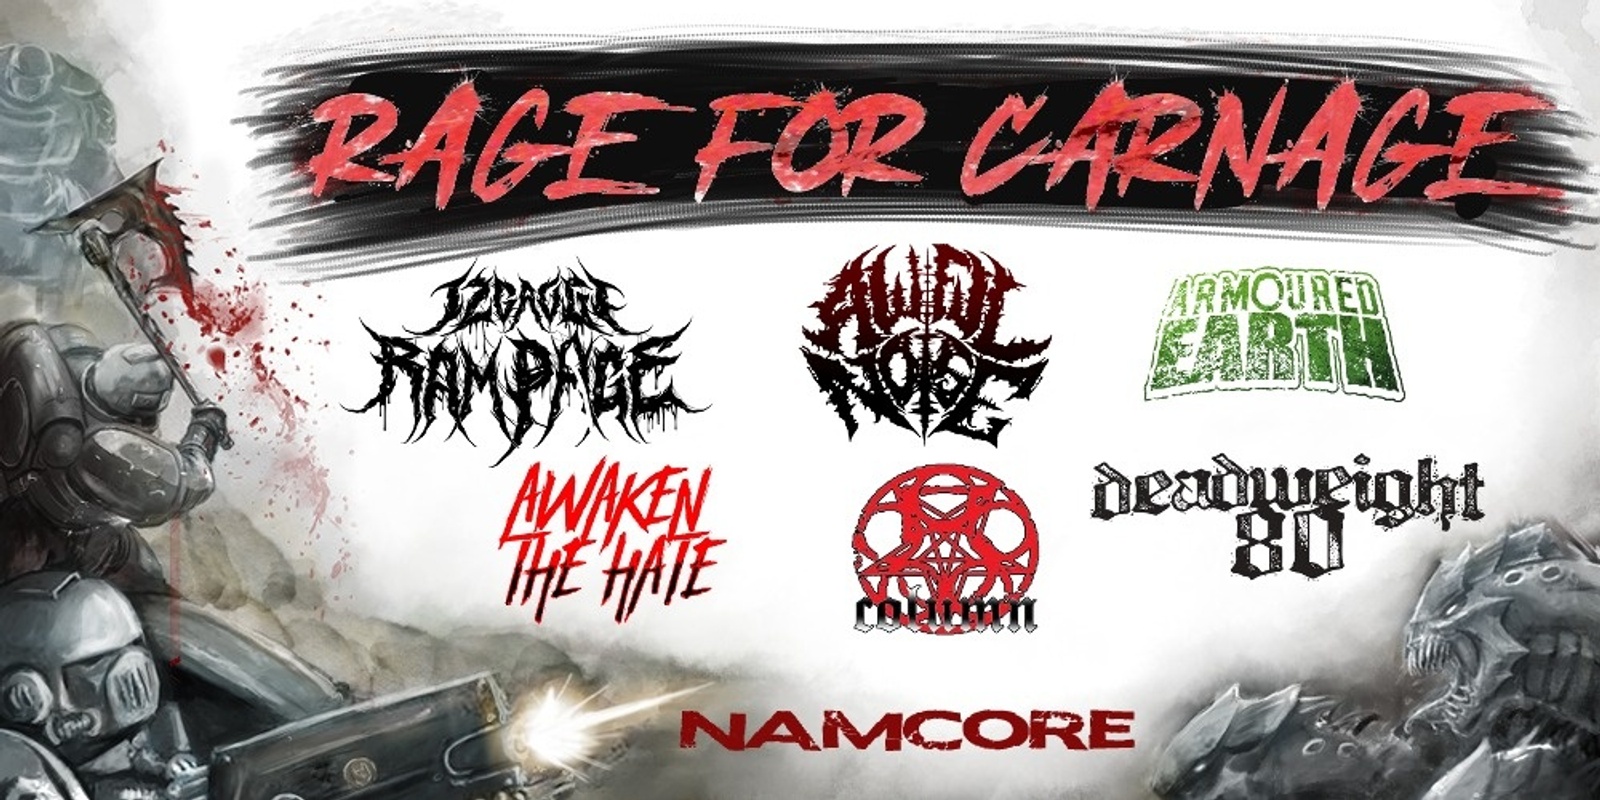 Banner image for RAGE FOR CARNAGE